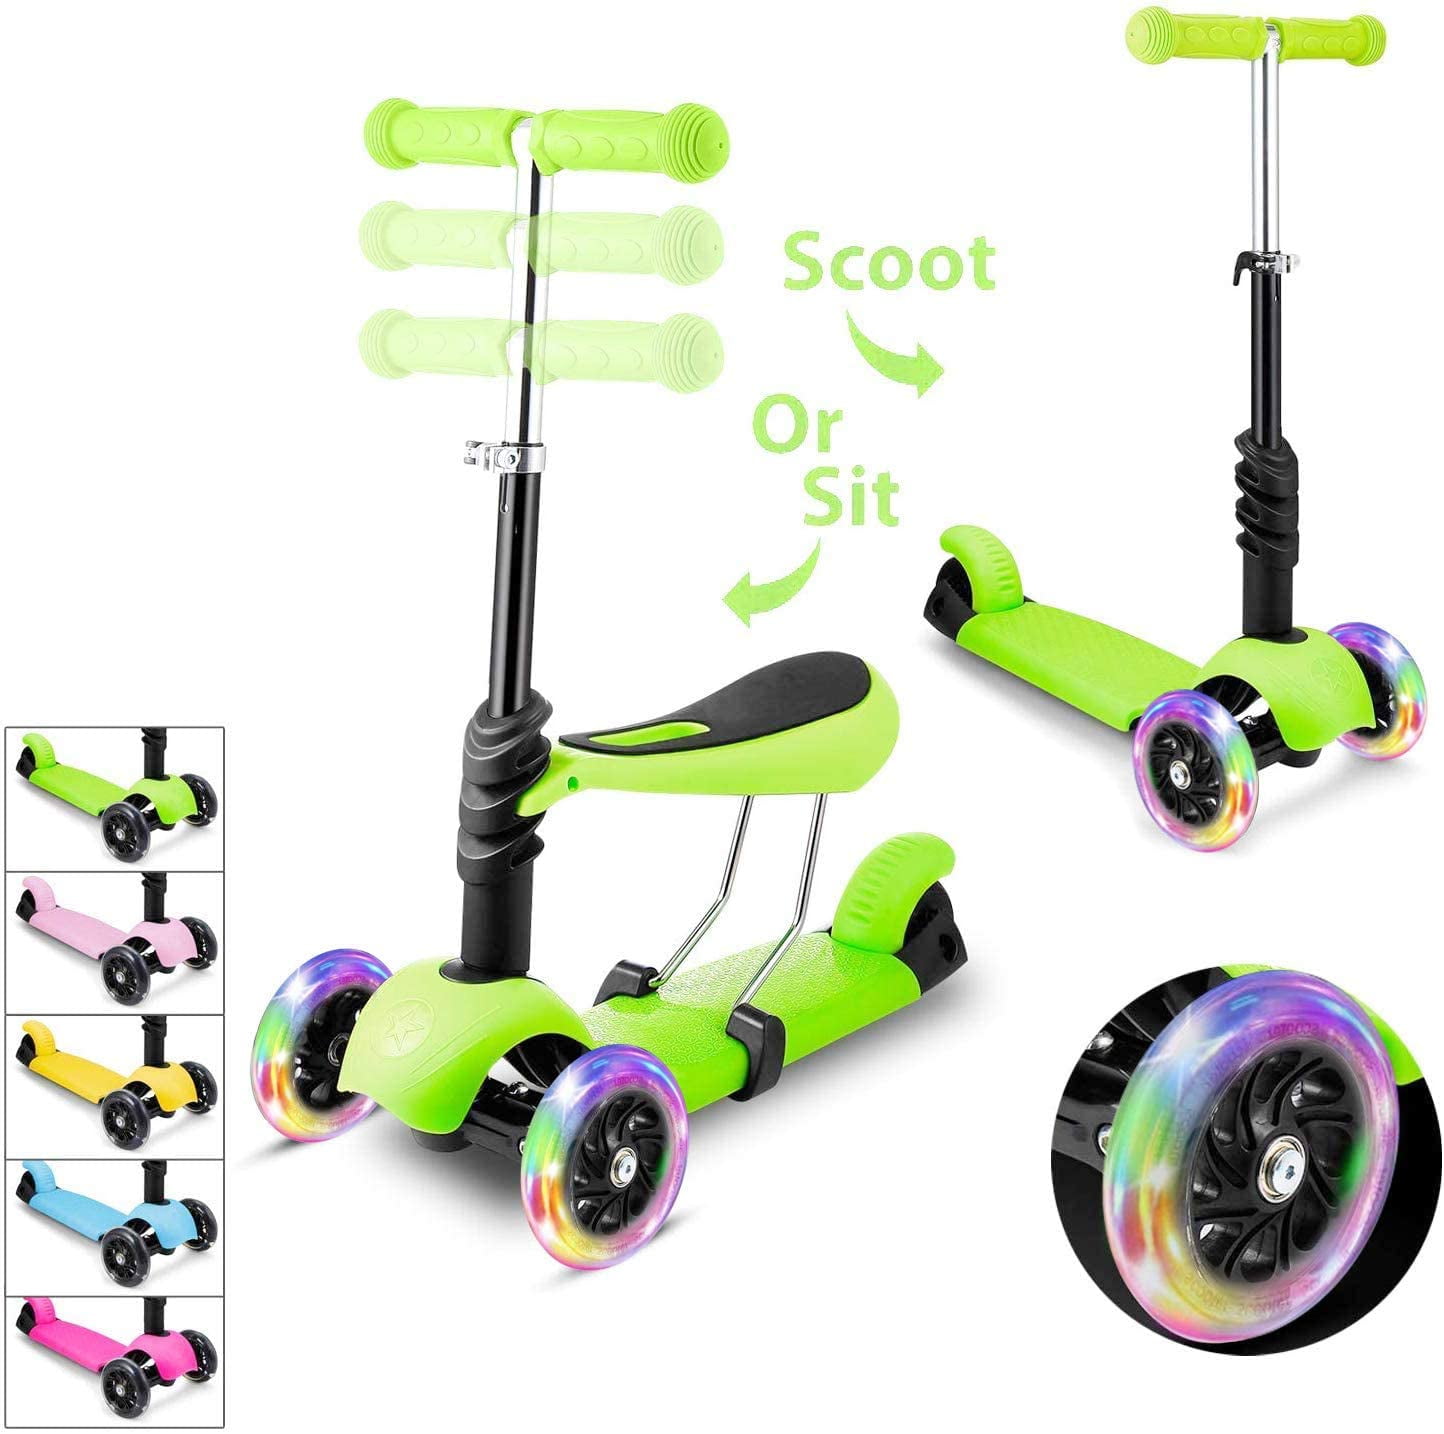 Details about   Folding Kick Scooter for Kids with LED Light Up 2 Wheel Glider Adjustable c 08 